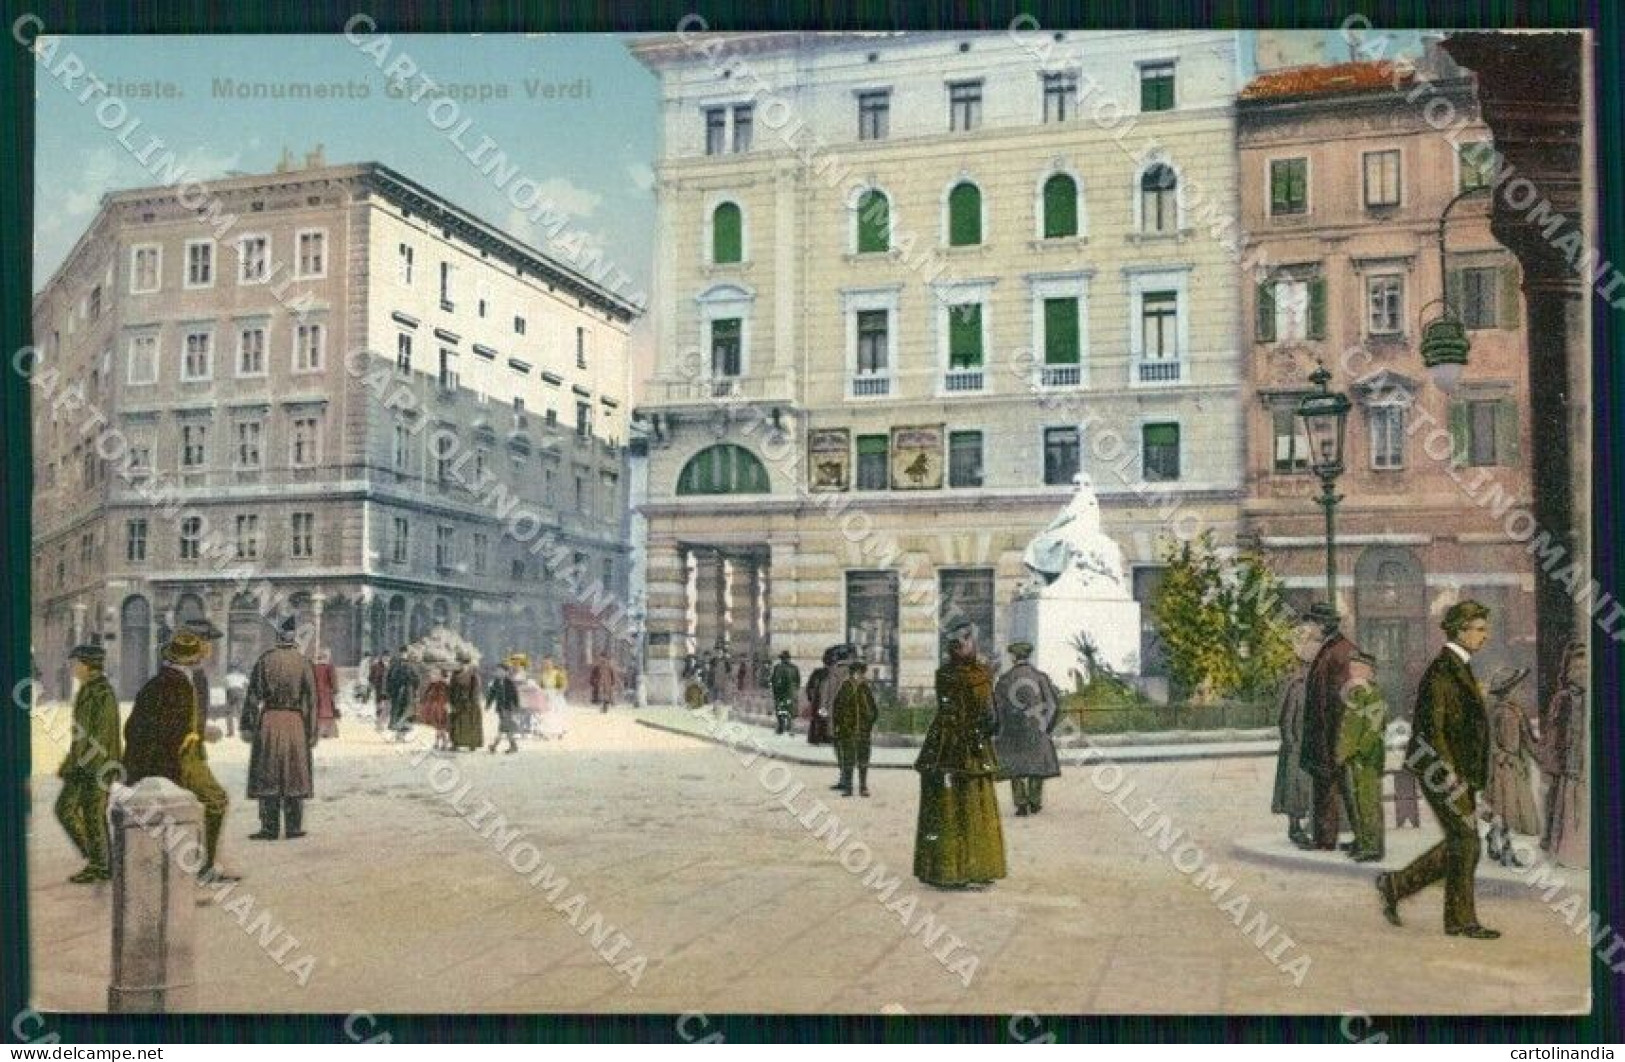 Trieste Città Monumento Giuseppe Verdi Cartolina RT4640 - Trieste